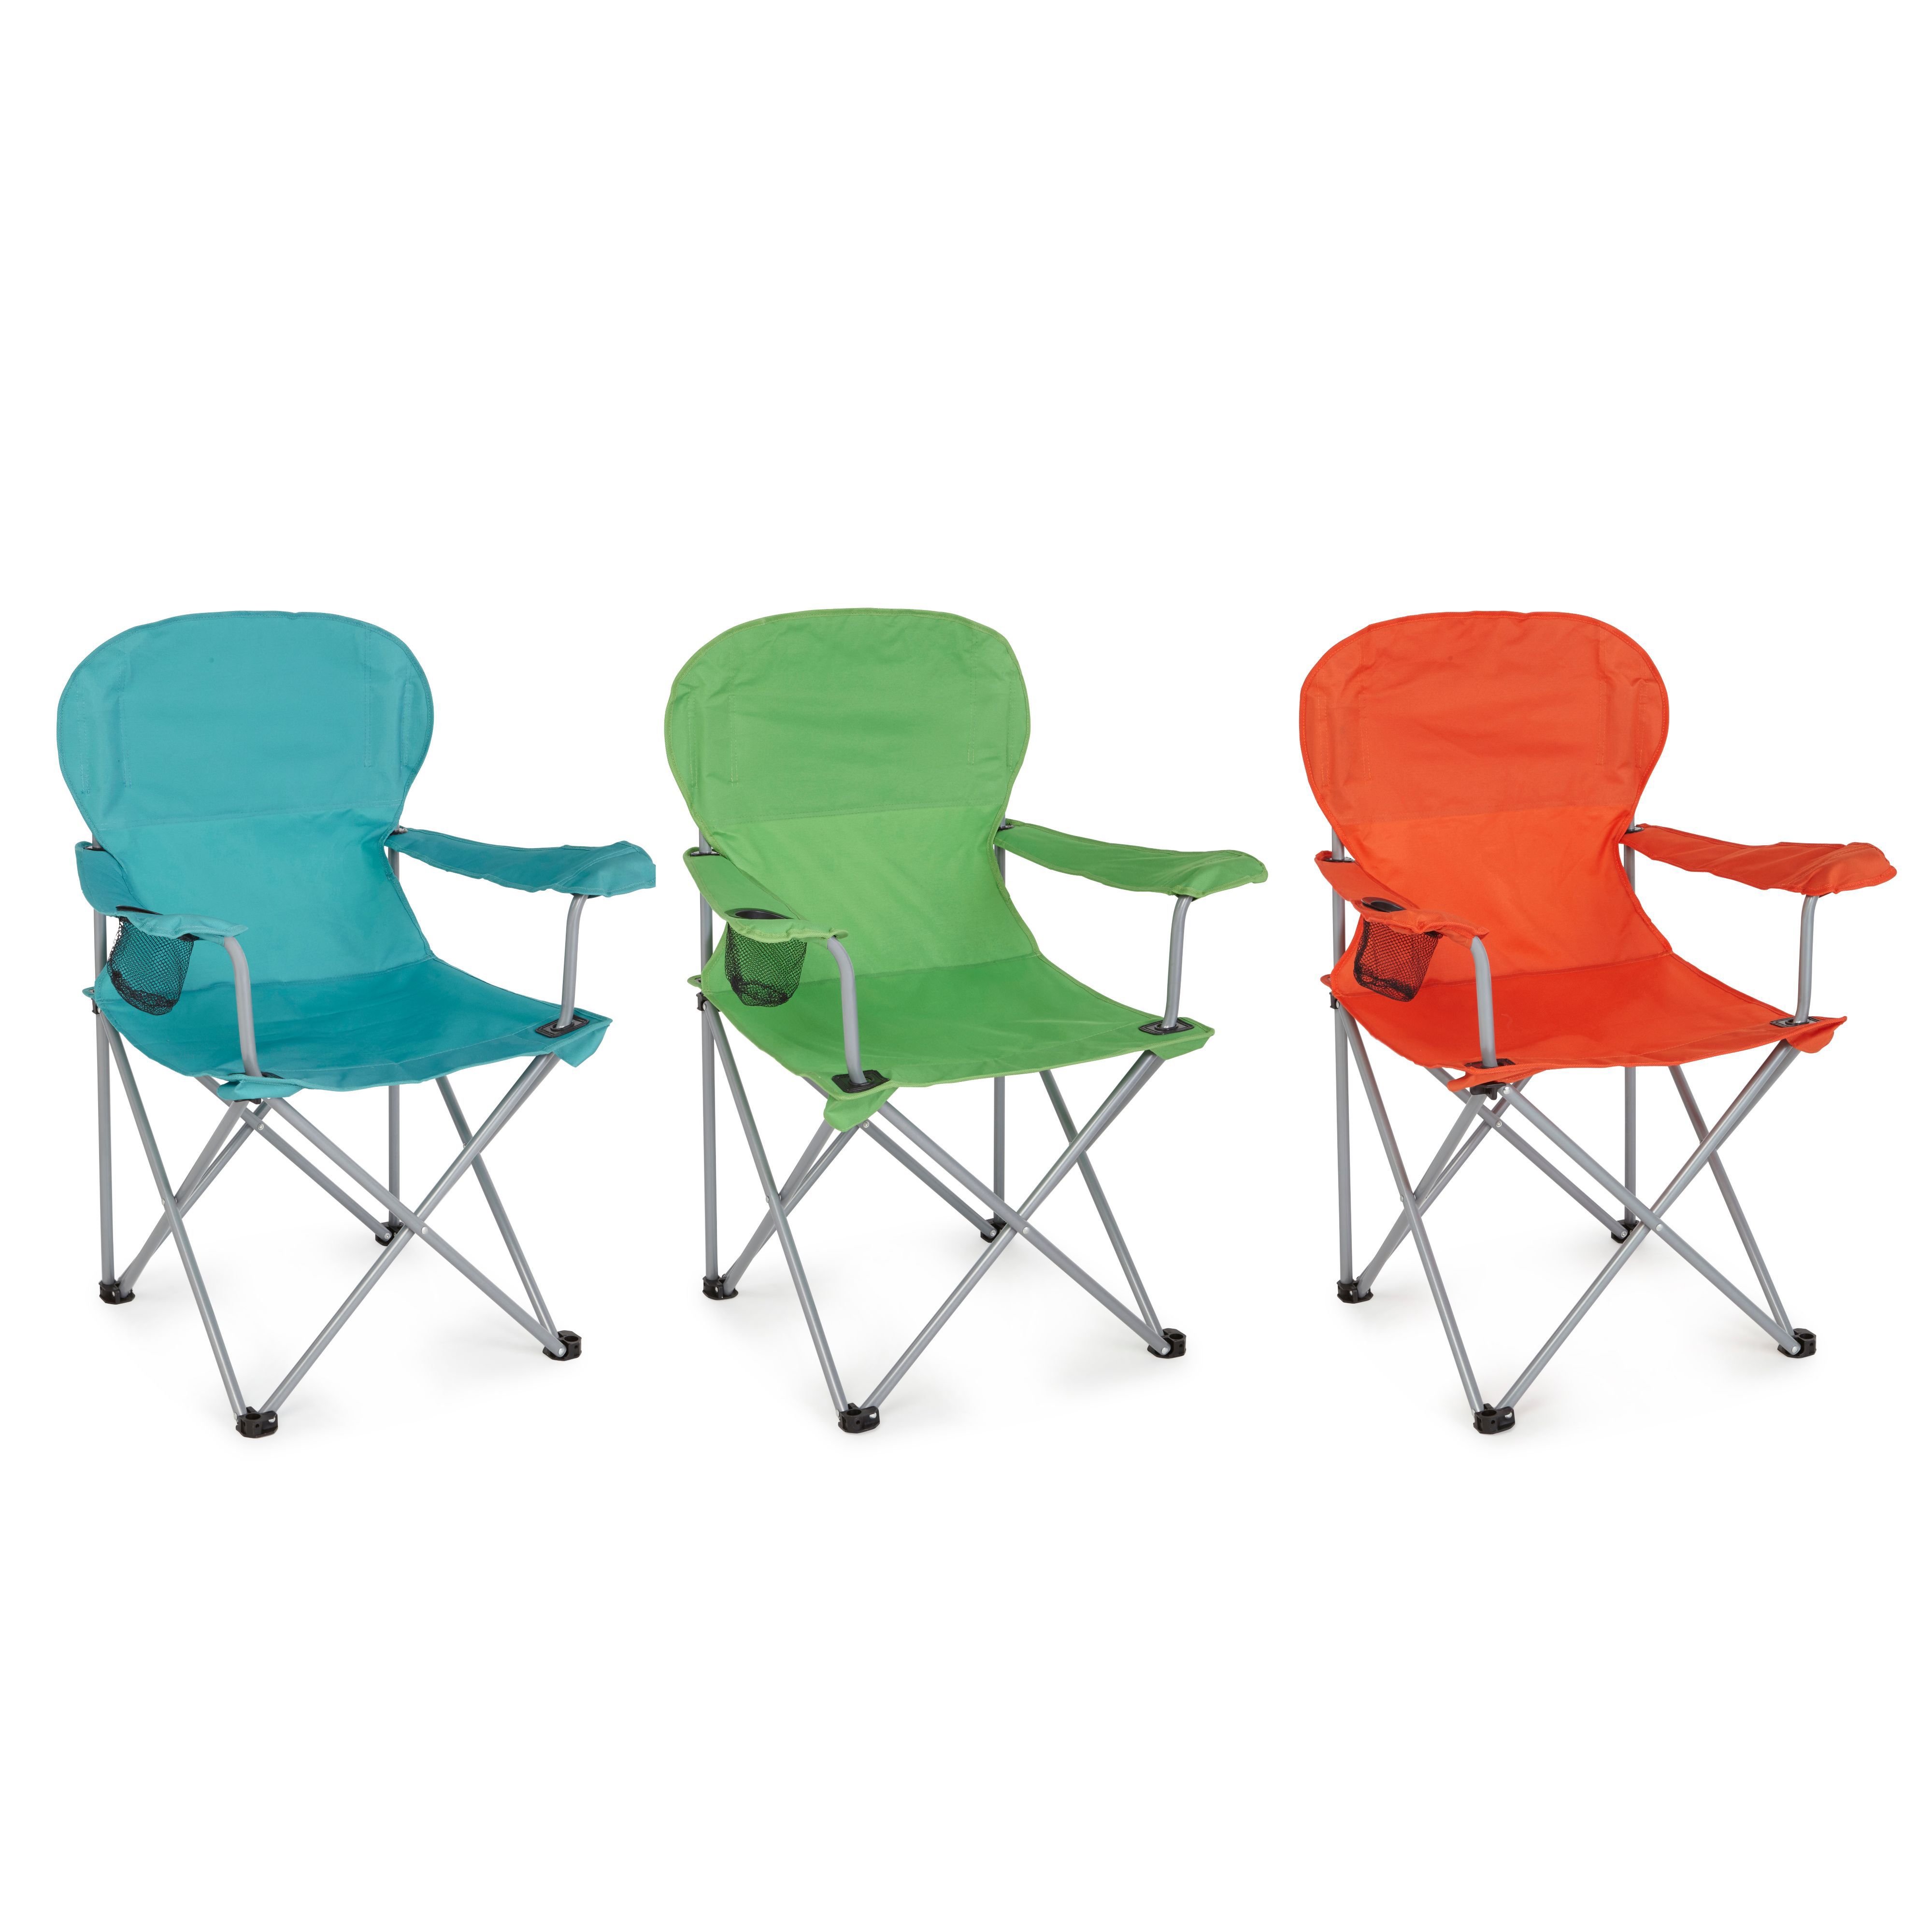 Molloy Multicolour Metal Camping Chair 